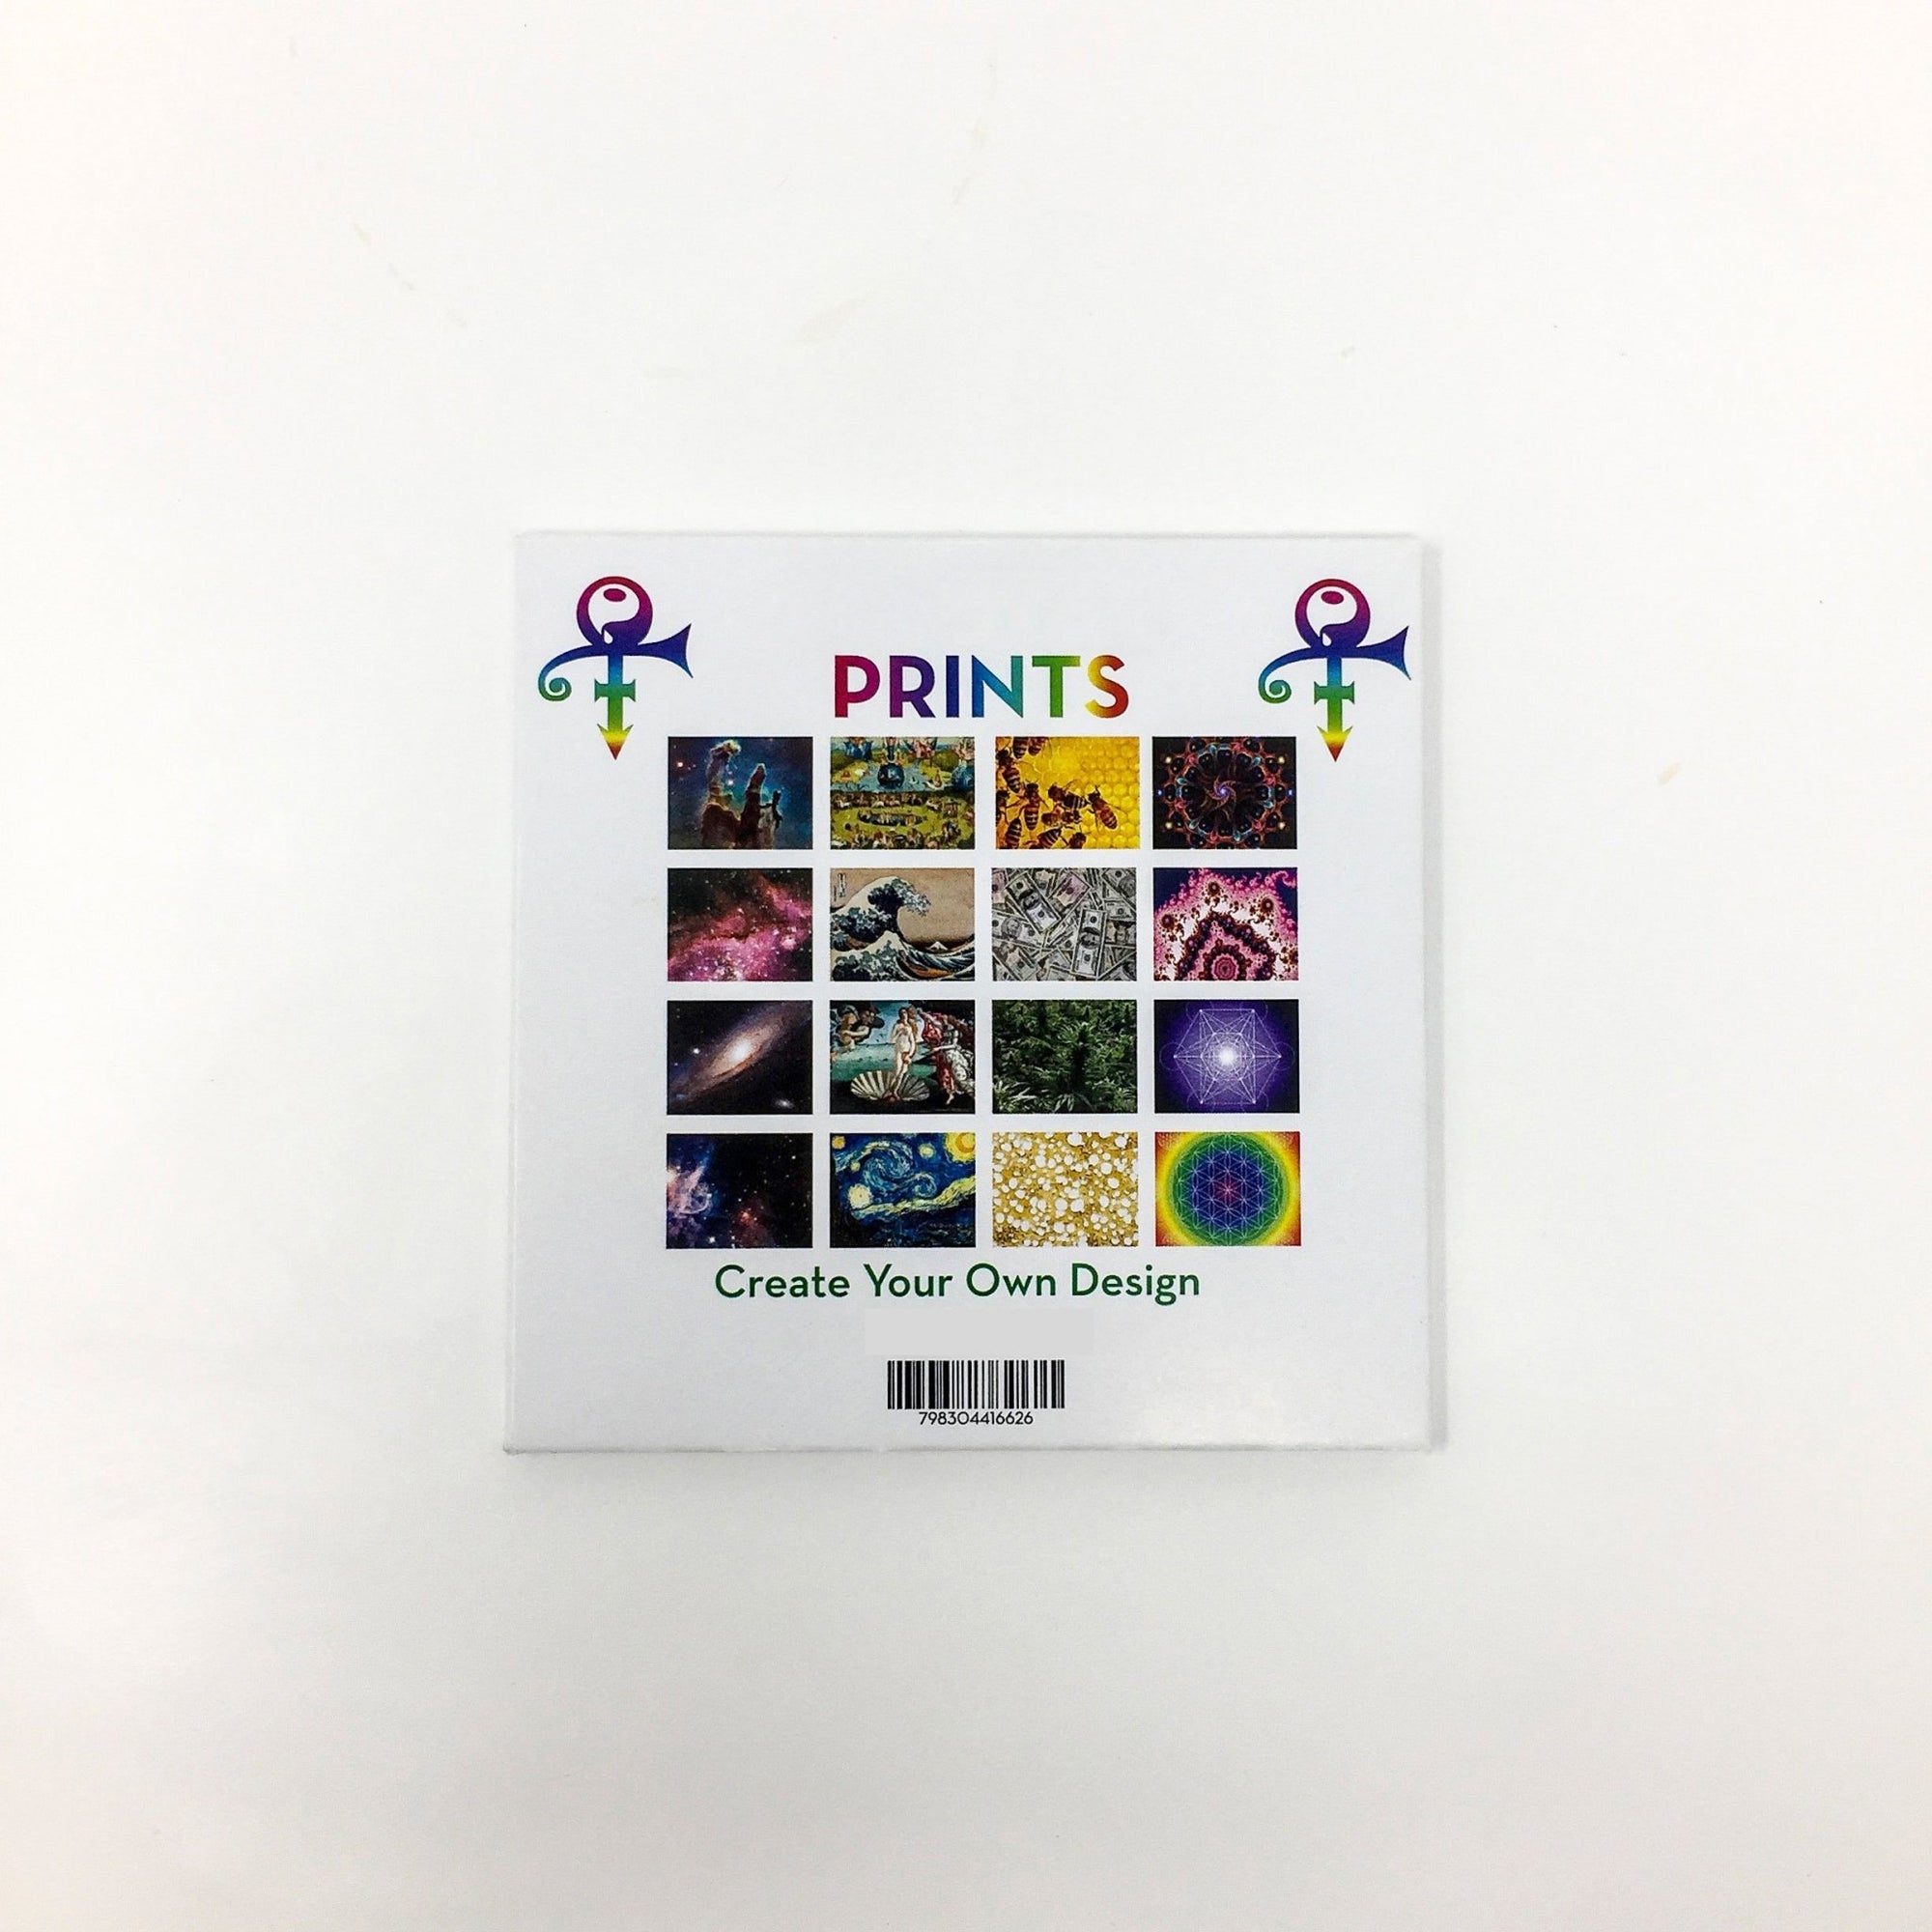 Printed Glassine release paper colorful artwork - Kraft & Kitchen